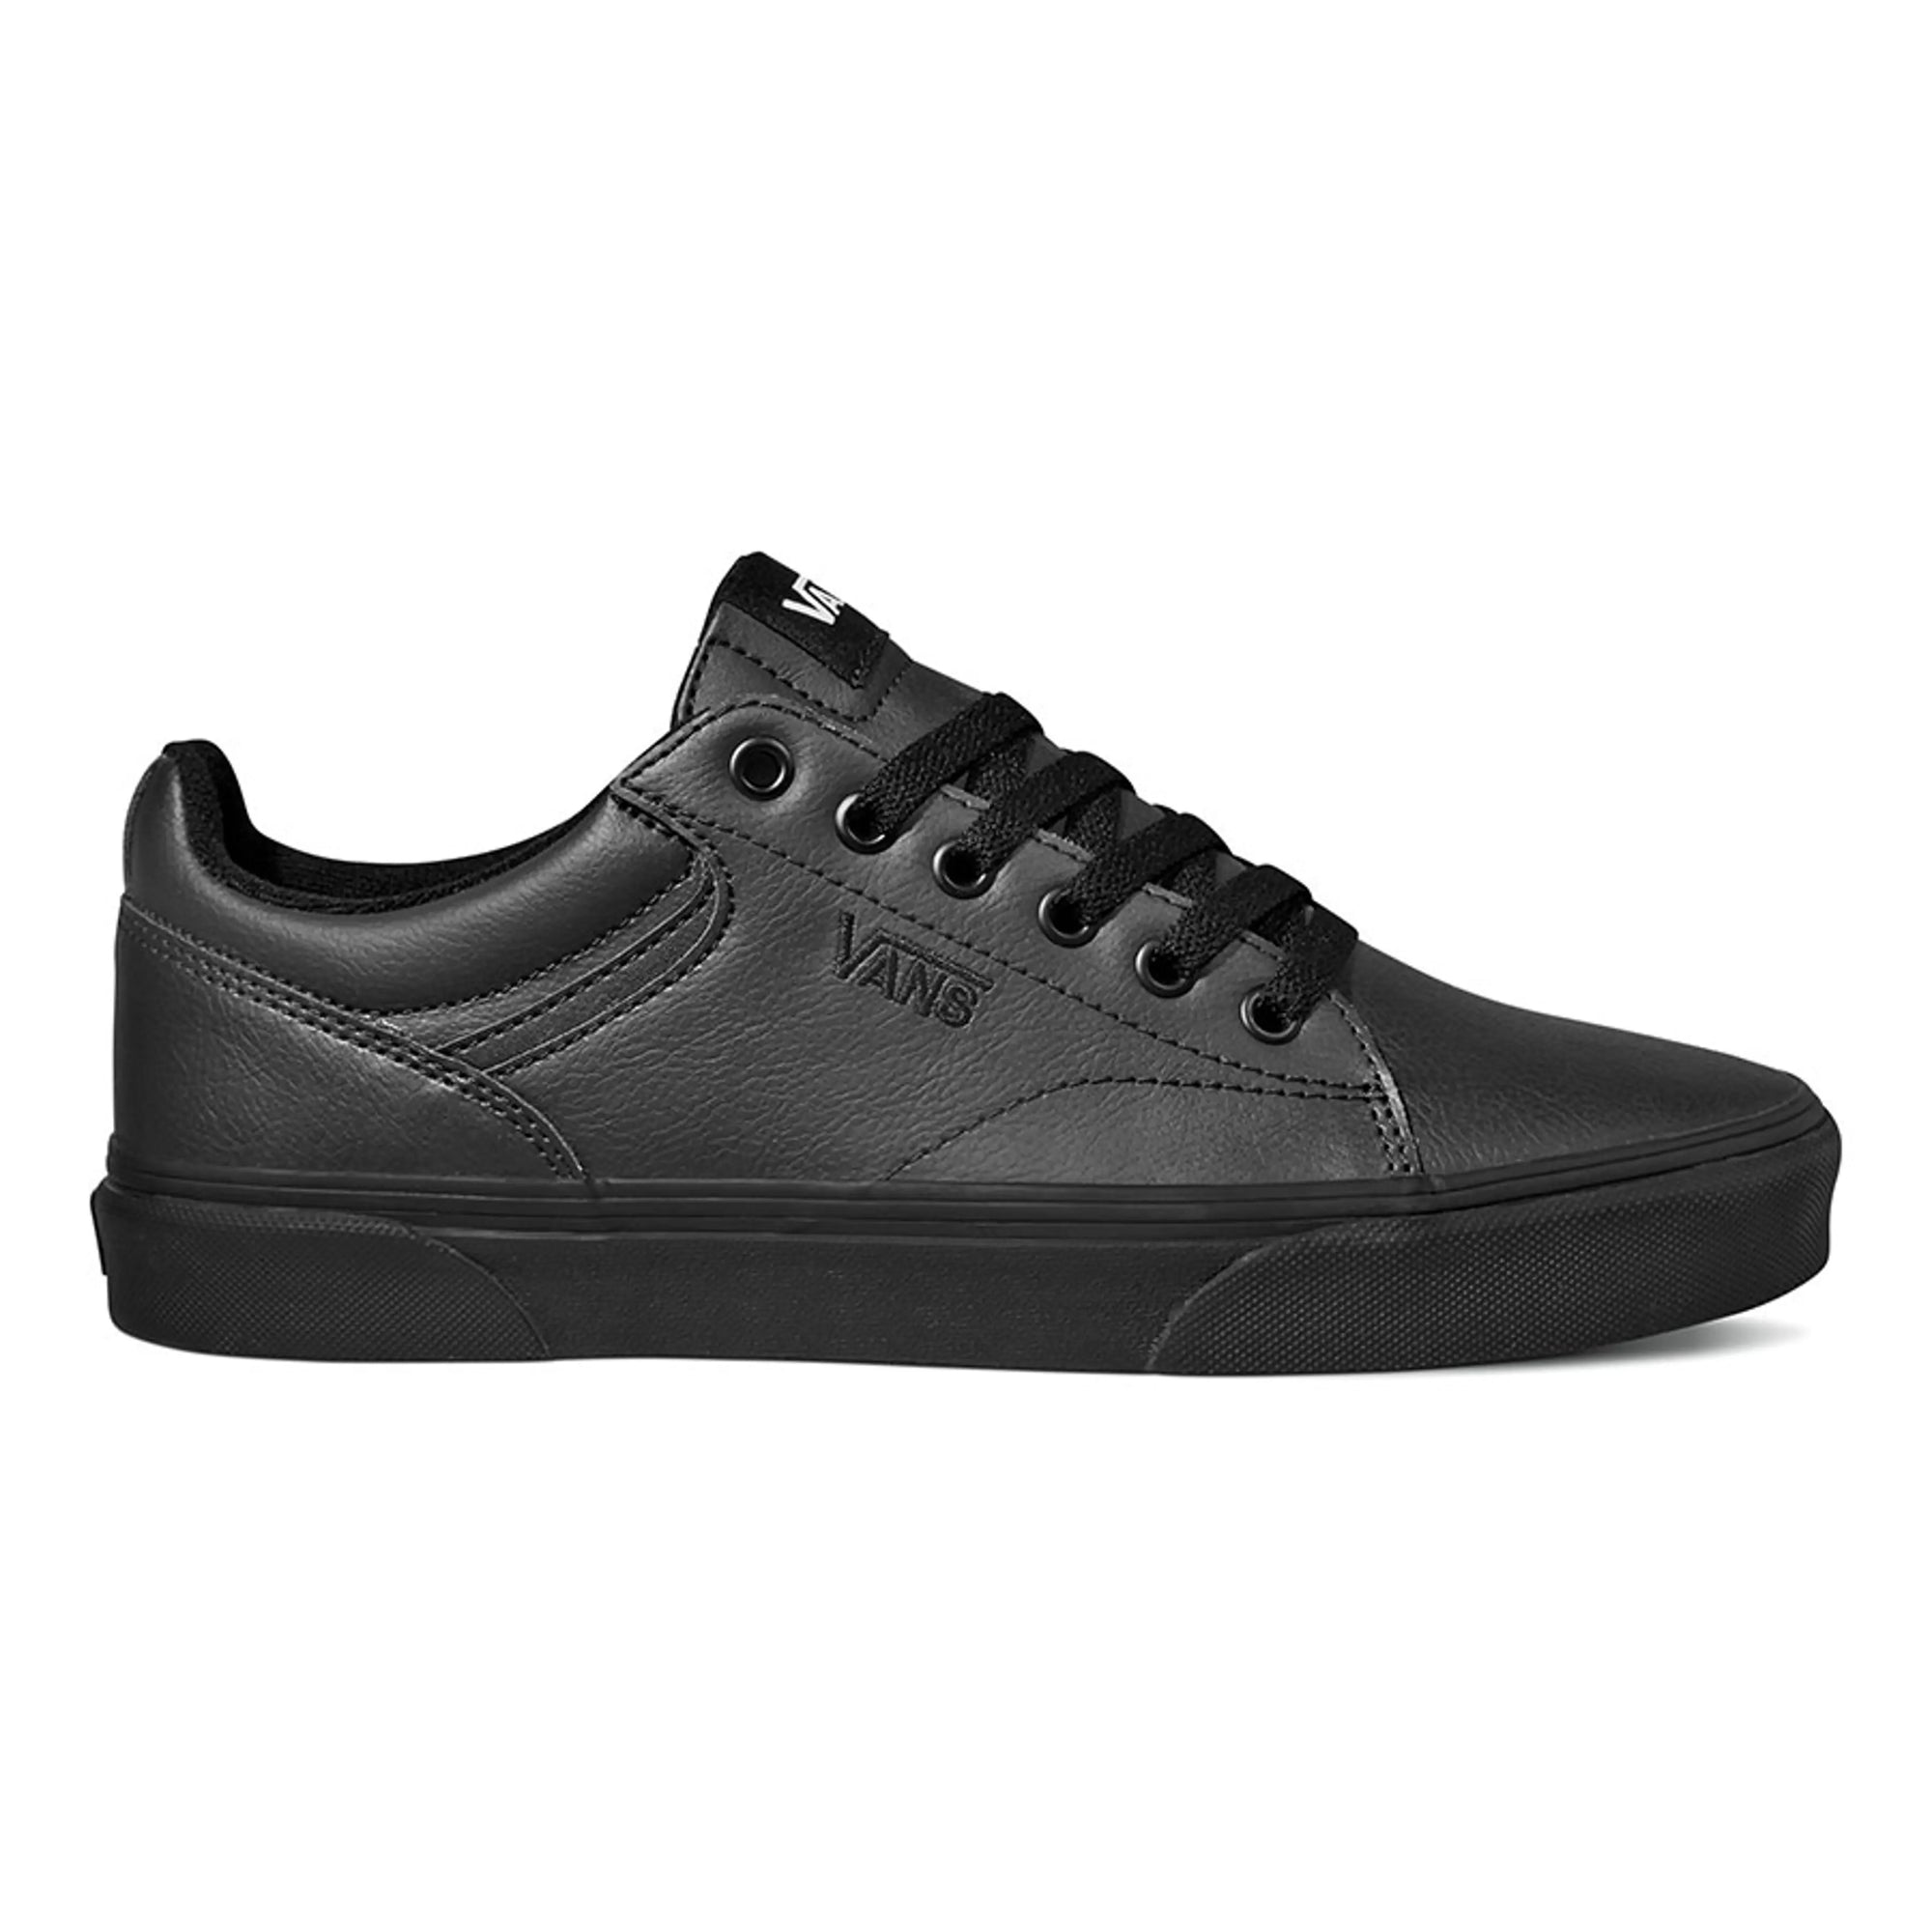 Vans Mens Tumble Seldan Shoes Vn0a4tze11i1 Footwear UK7 EU40.5 / Black,UK8 EU42 / Black,UK9 EU43 / Black,UK10 EU44.5 / Black,UK11 EU46 / Black